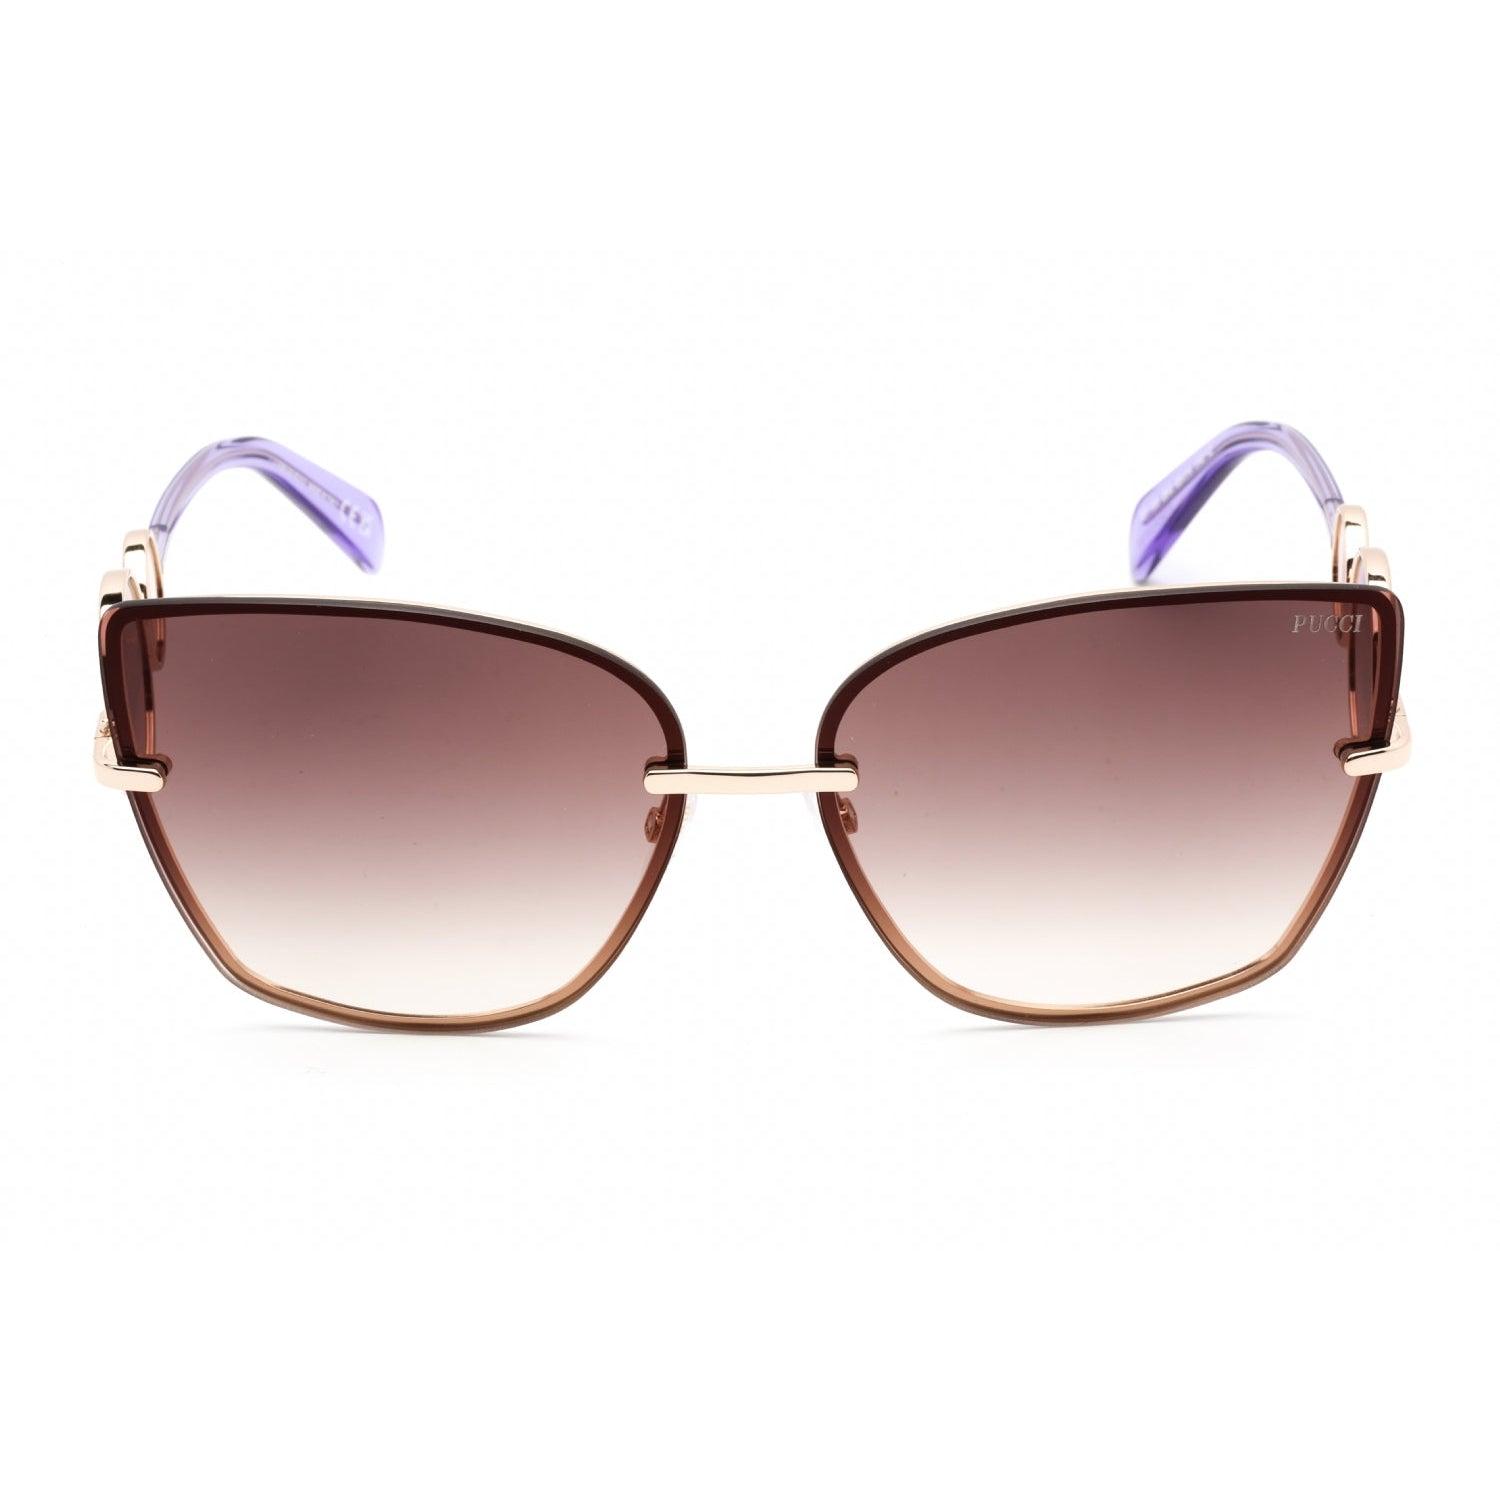 Emilio Pucci 52mm Geometric Sunglasses